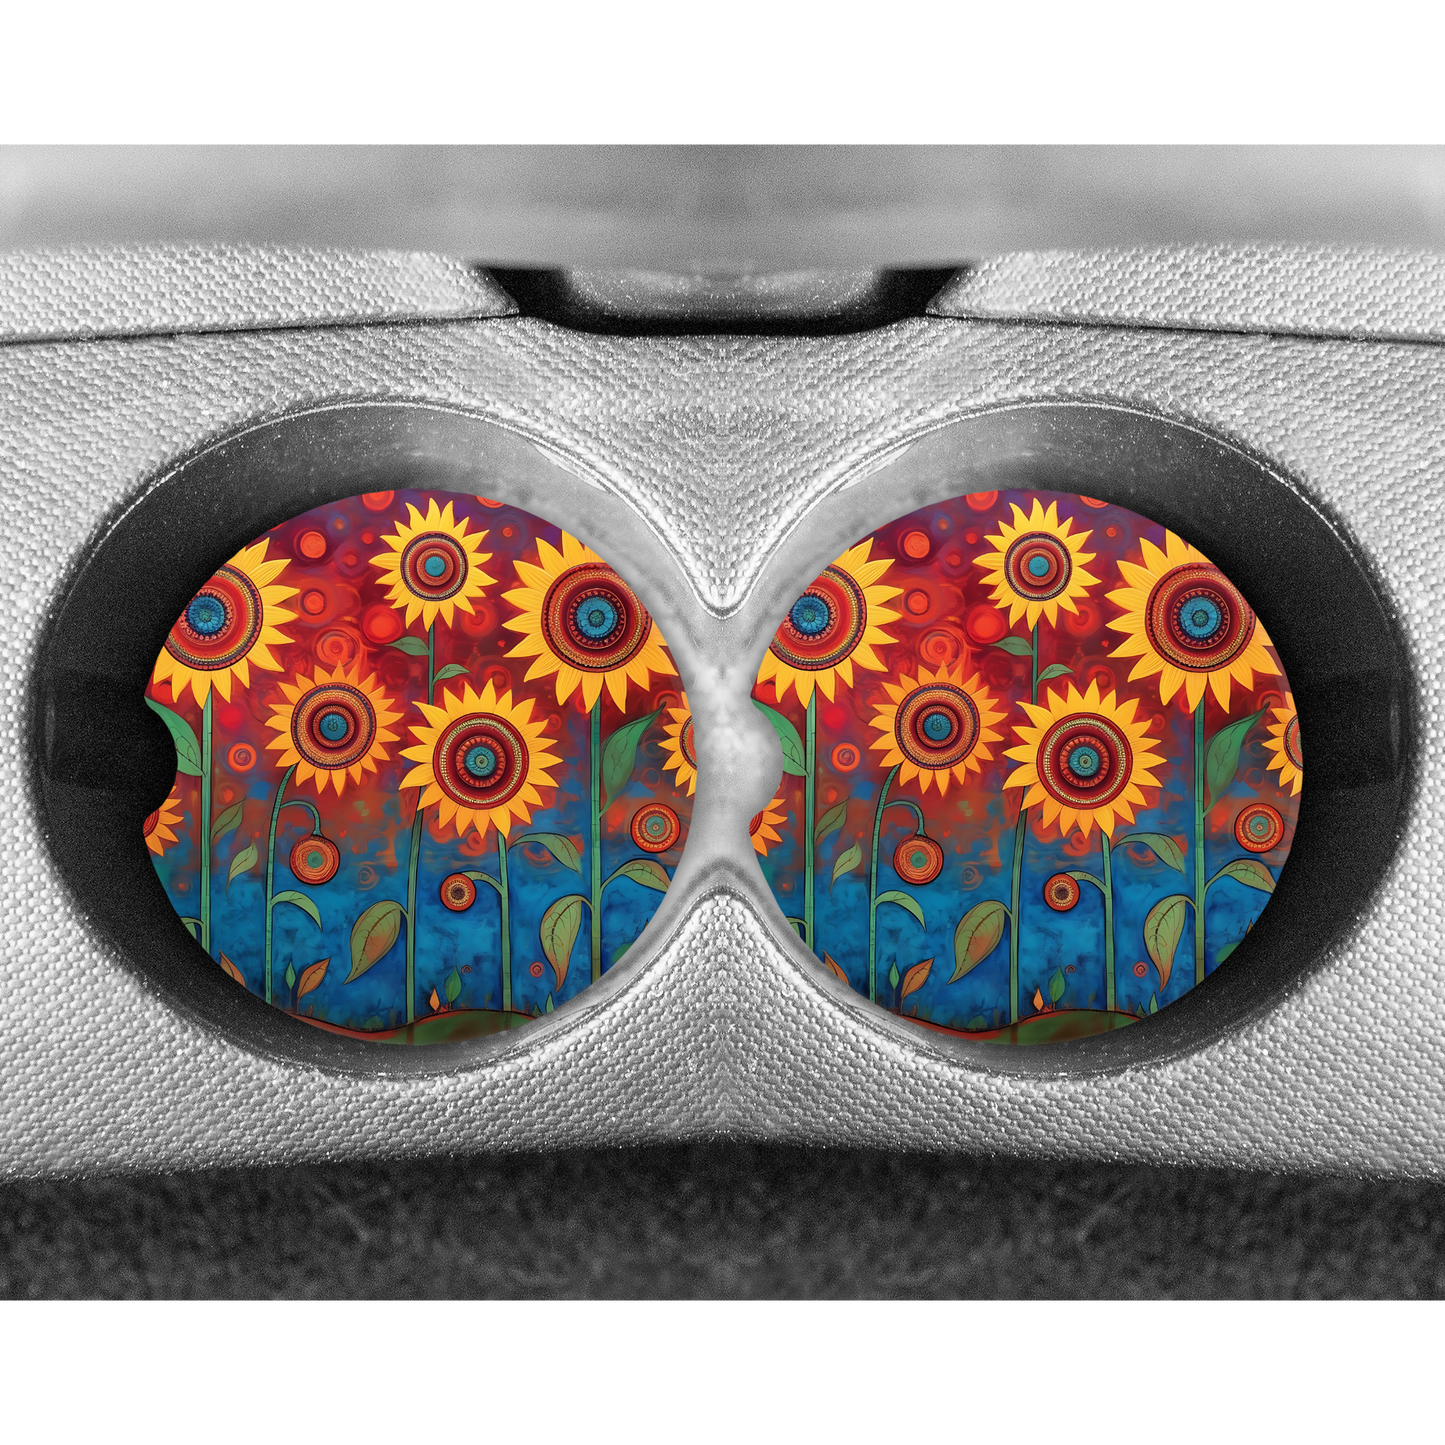 Premium Neoprene Car Coasters | Drink Holders for Your Car Console - Set of 2 Folk Art Sunflowers Design